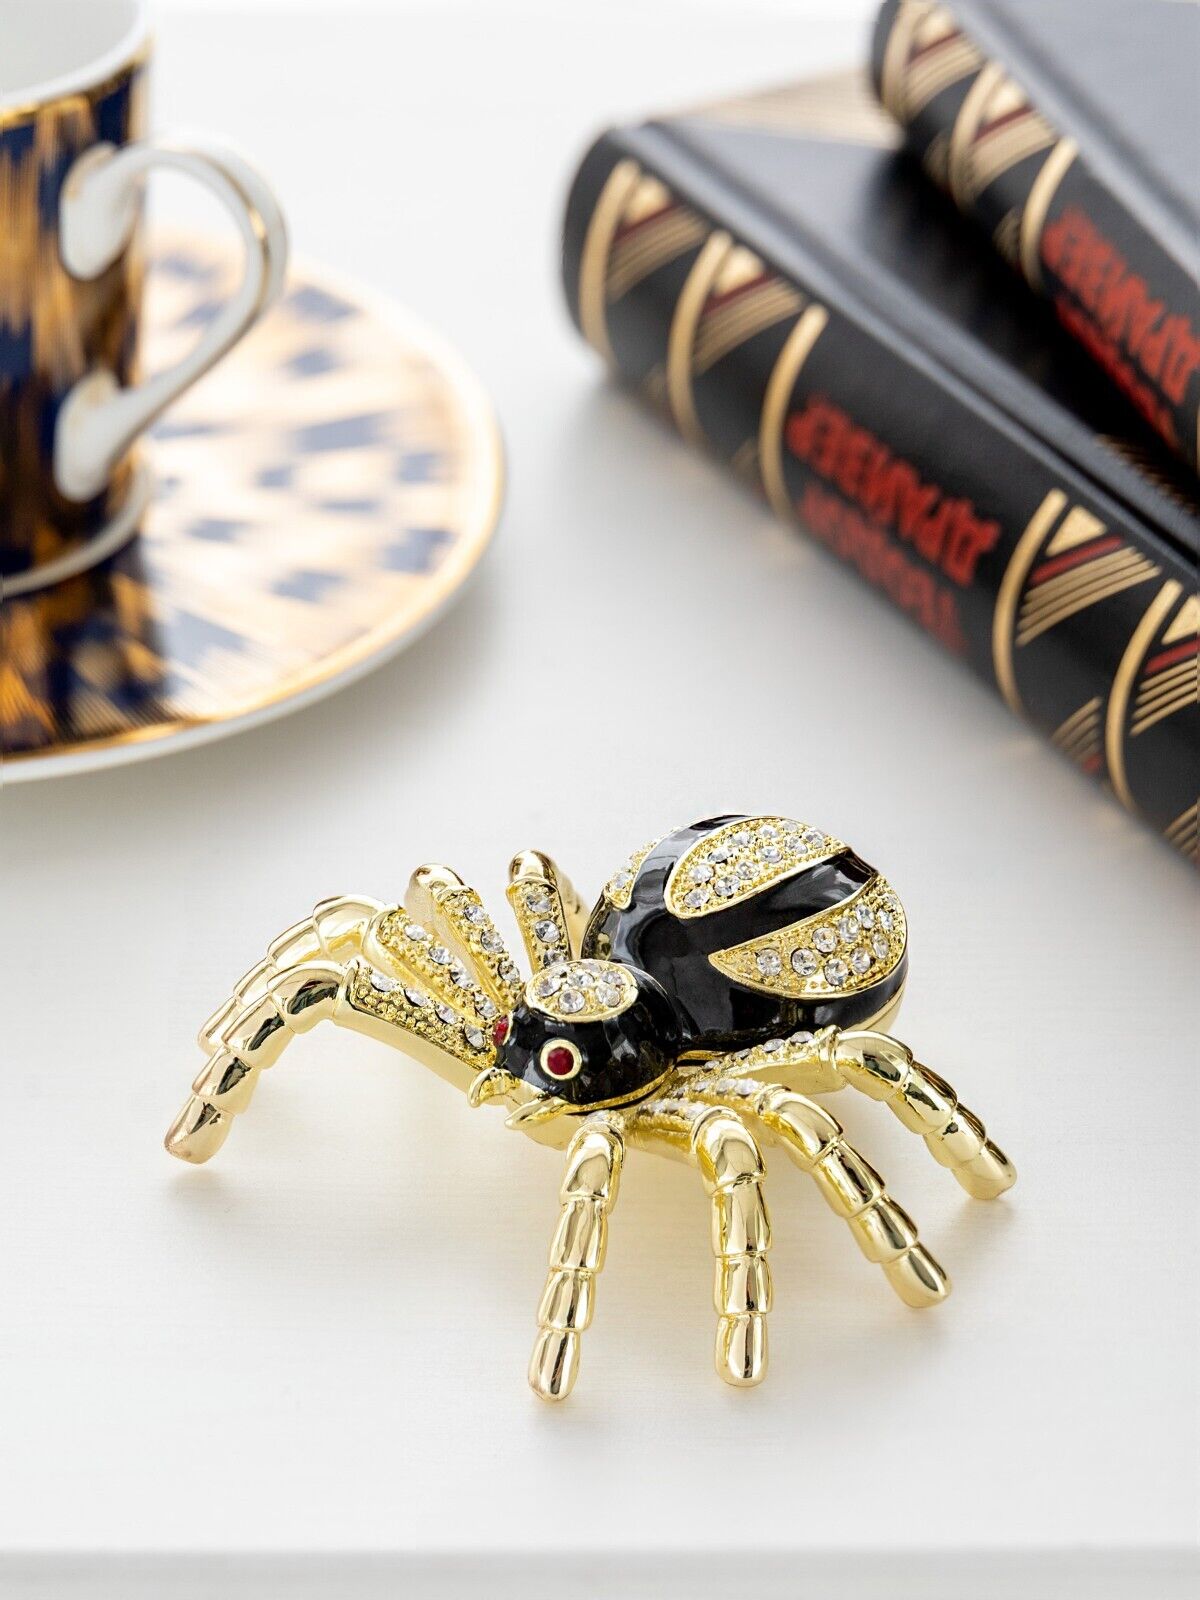 Keren Kopal Black Tarantula Spider Trinket Box Decorated with Austrian Crystals